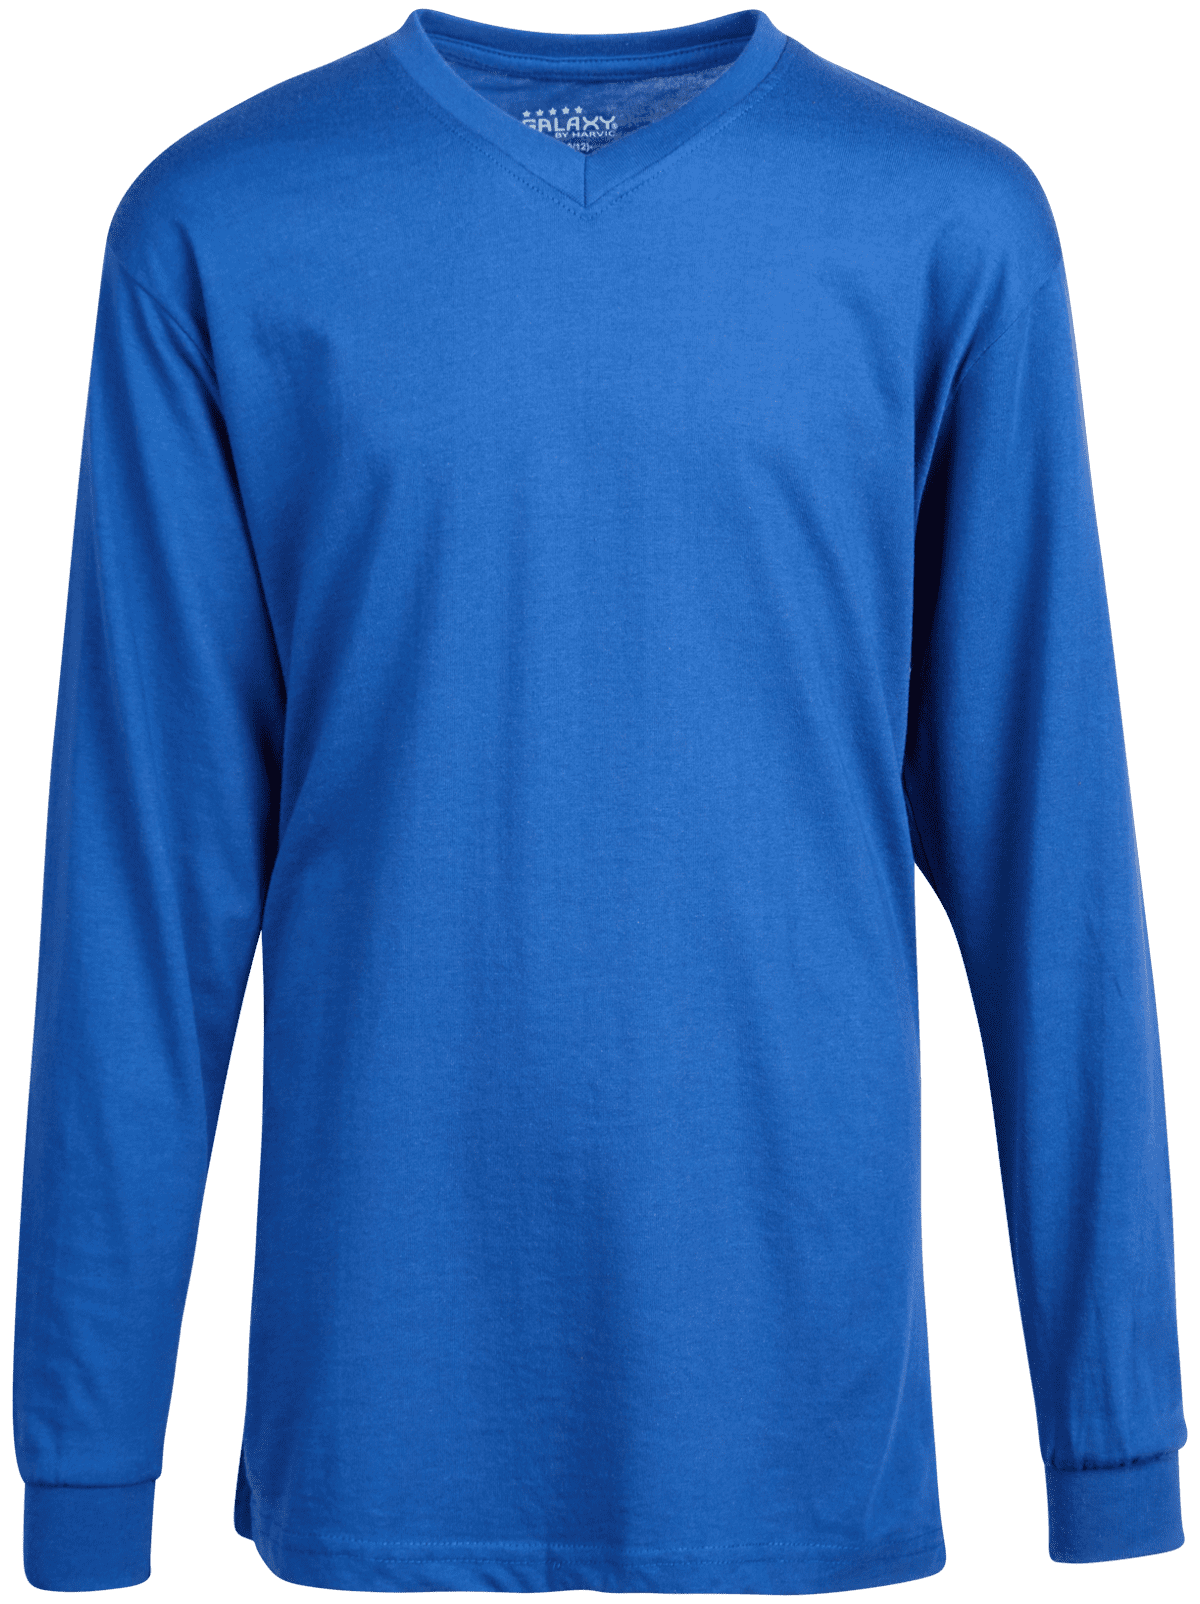 4 Pack Galaxy by Harvic Boys' Long Sleeve Tee Shirt Solid Basic Tagless V-Neck Knit Top 